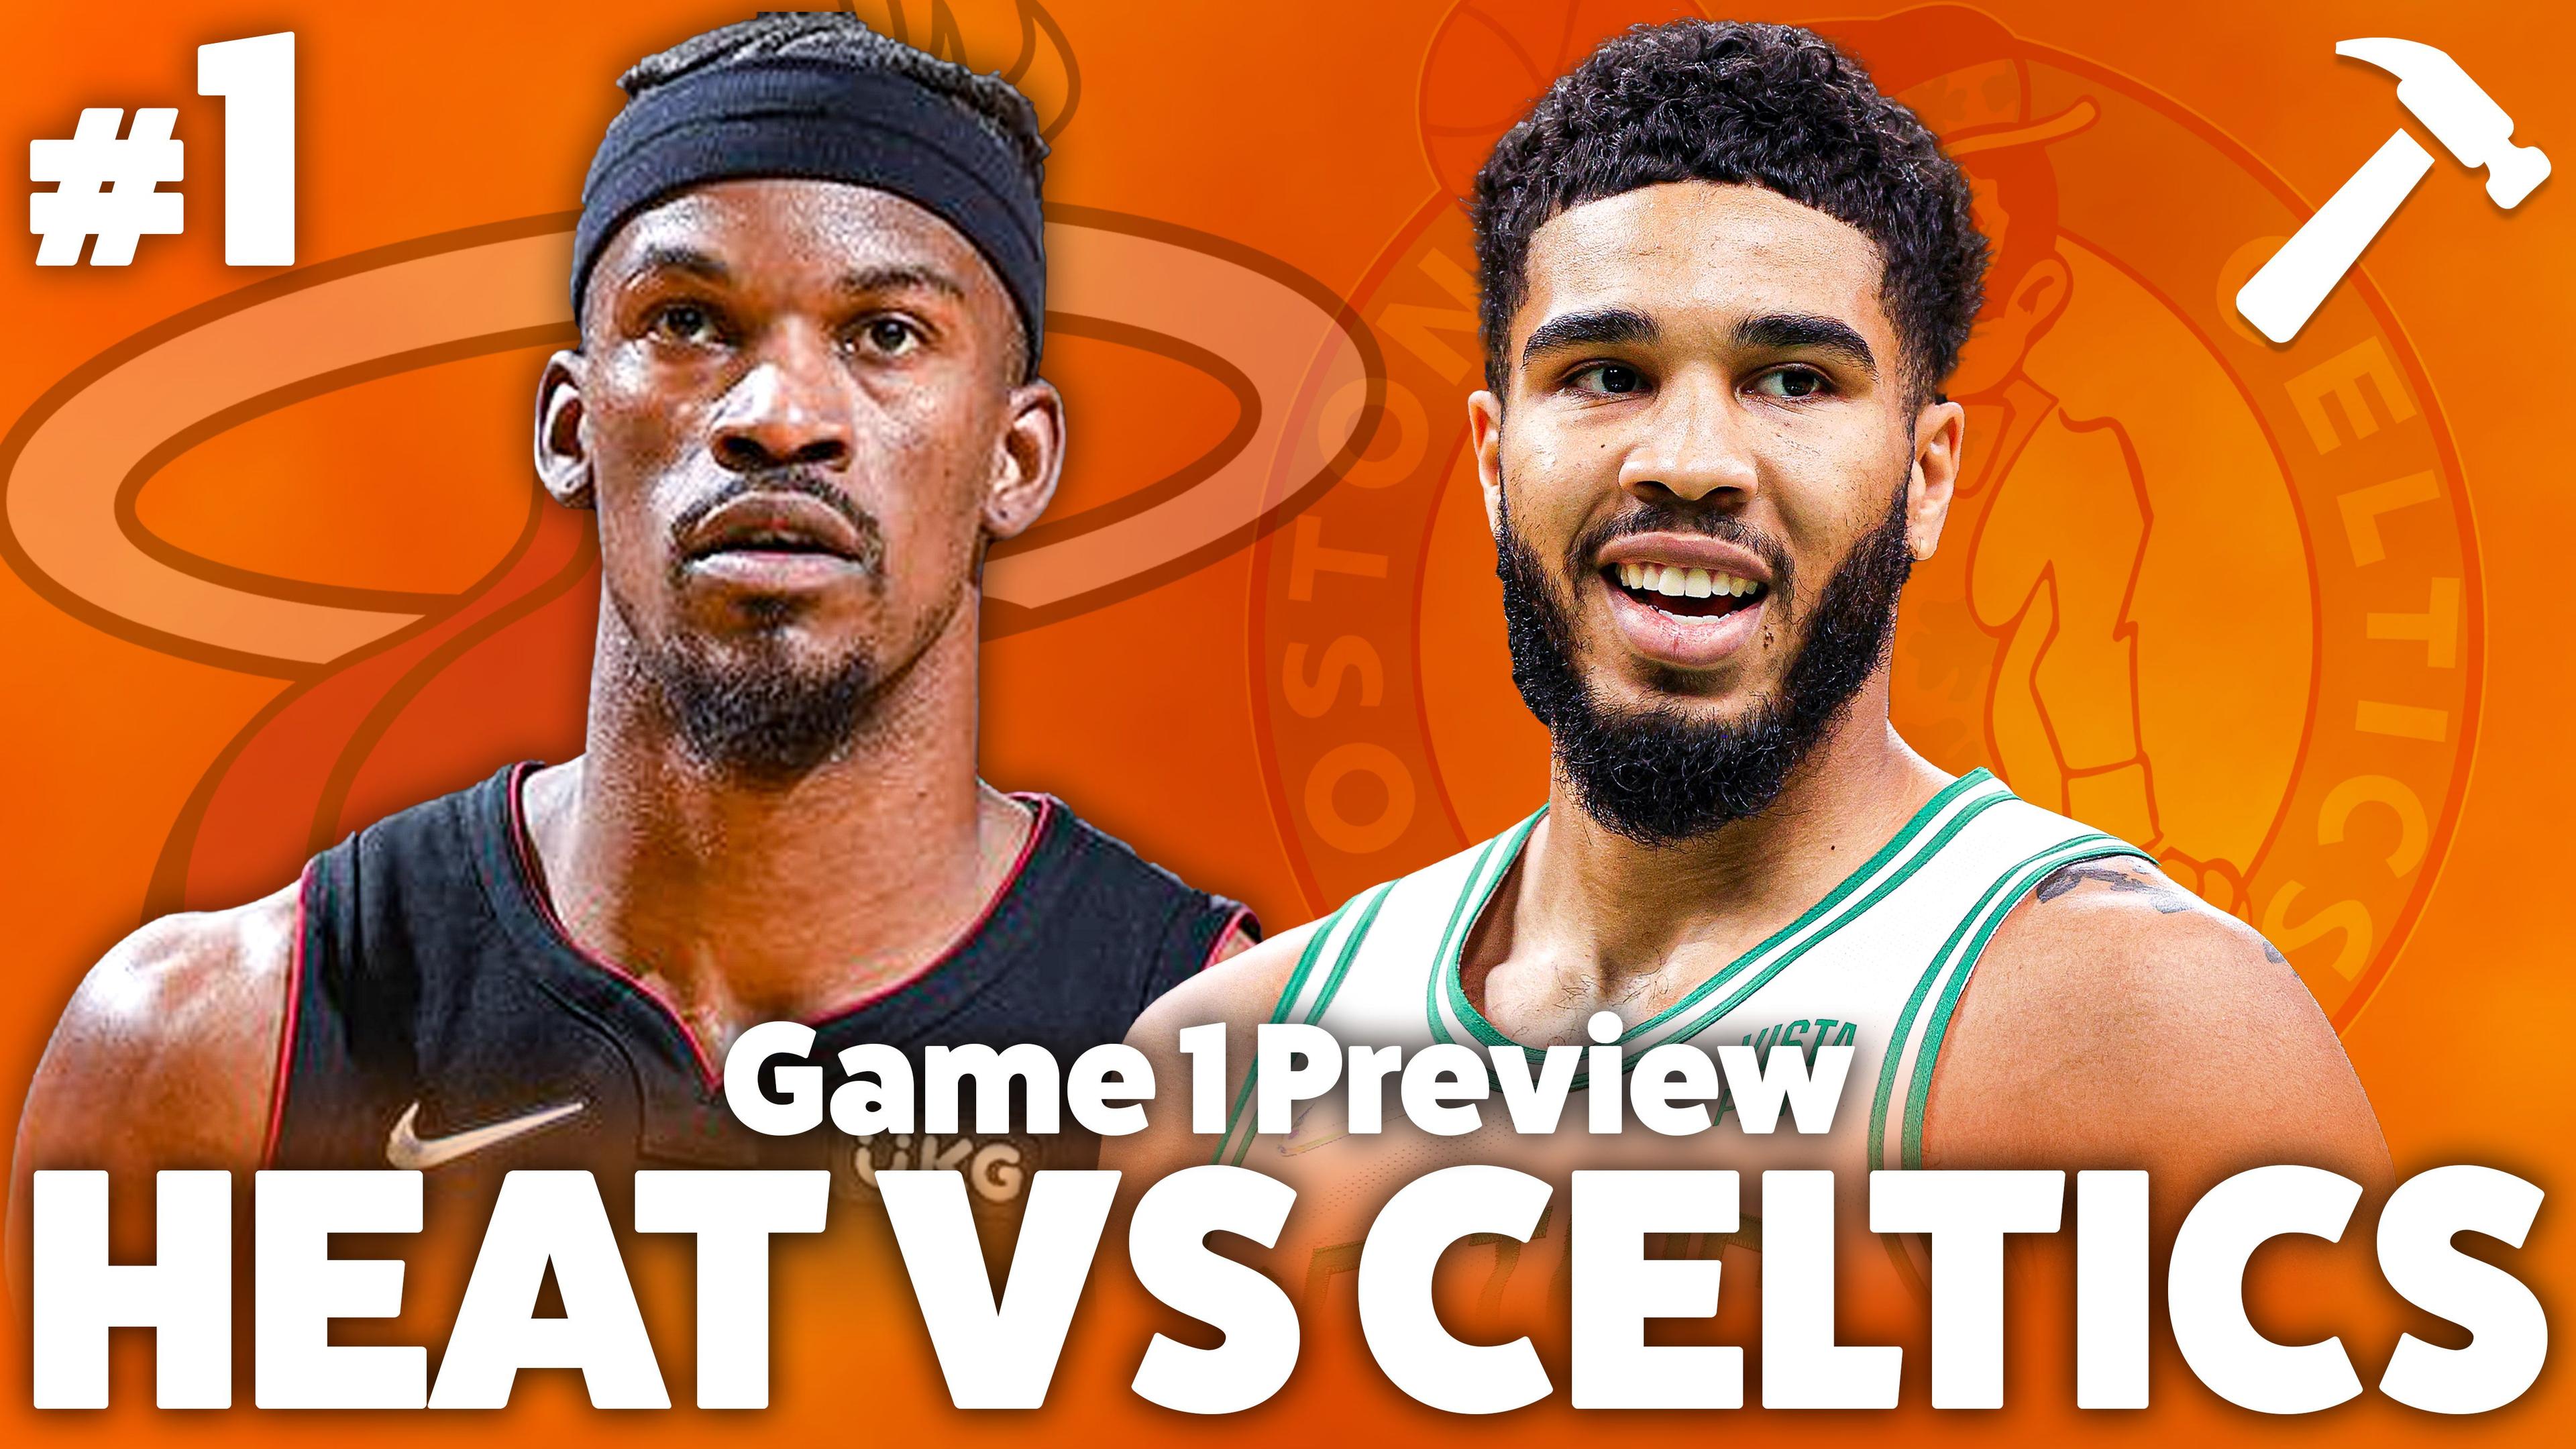 Heat vs Celtics Game 1 Preview.jpg